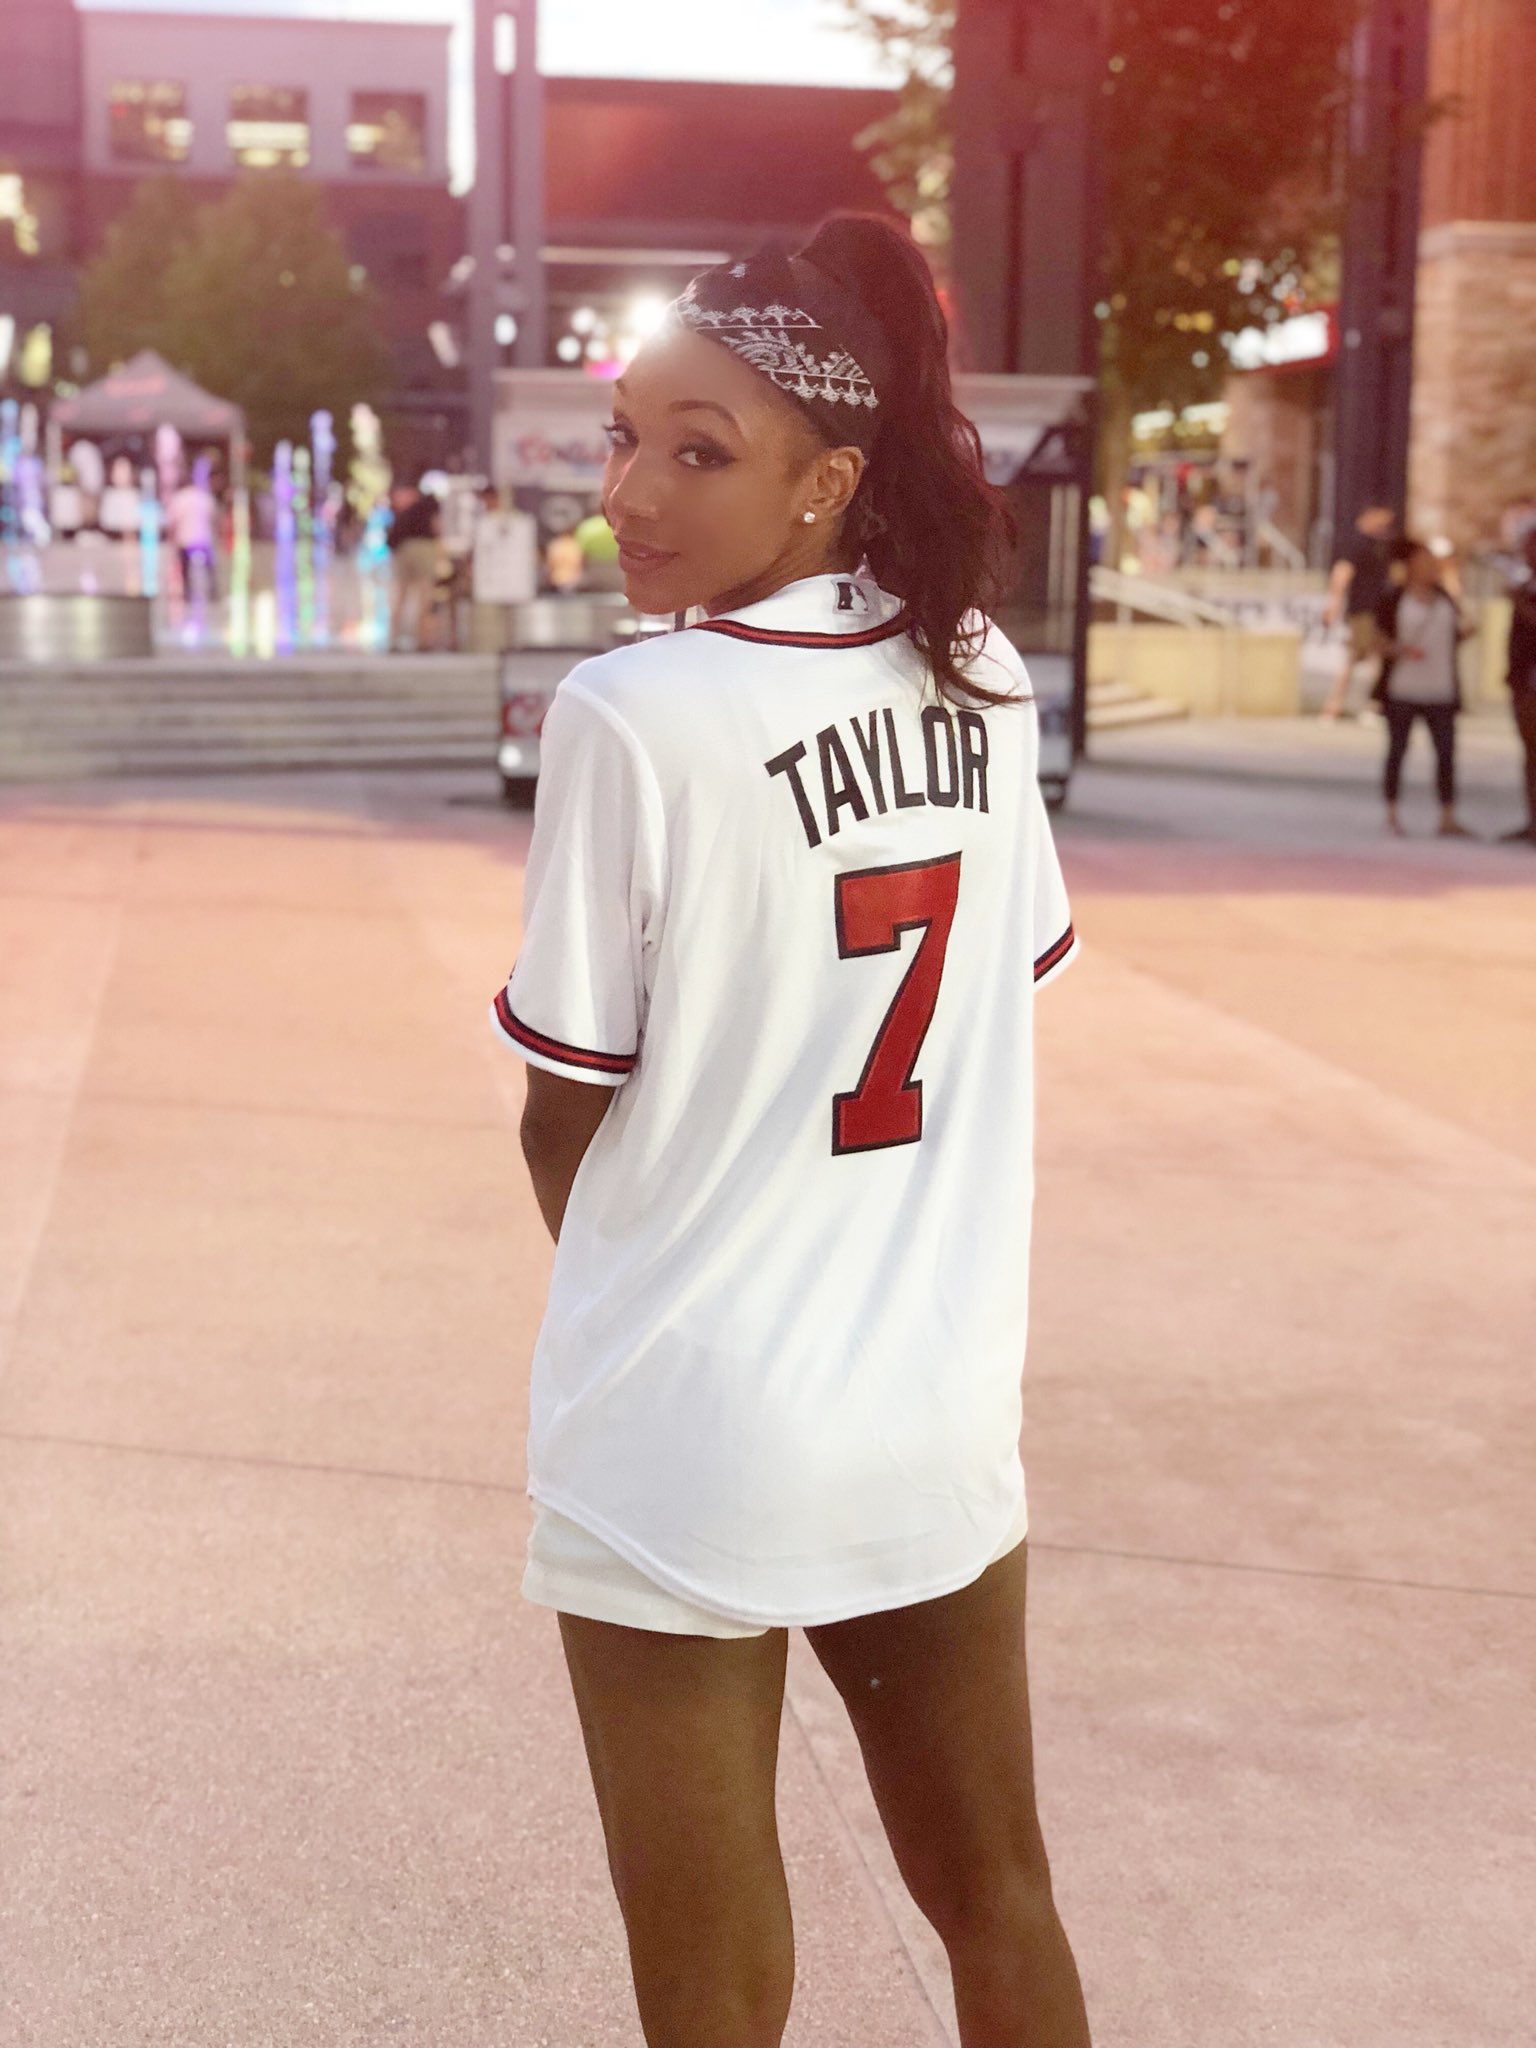 Maria Taylor on X: Forever. I. Love. Atlanta. ❤️ @Braves